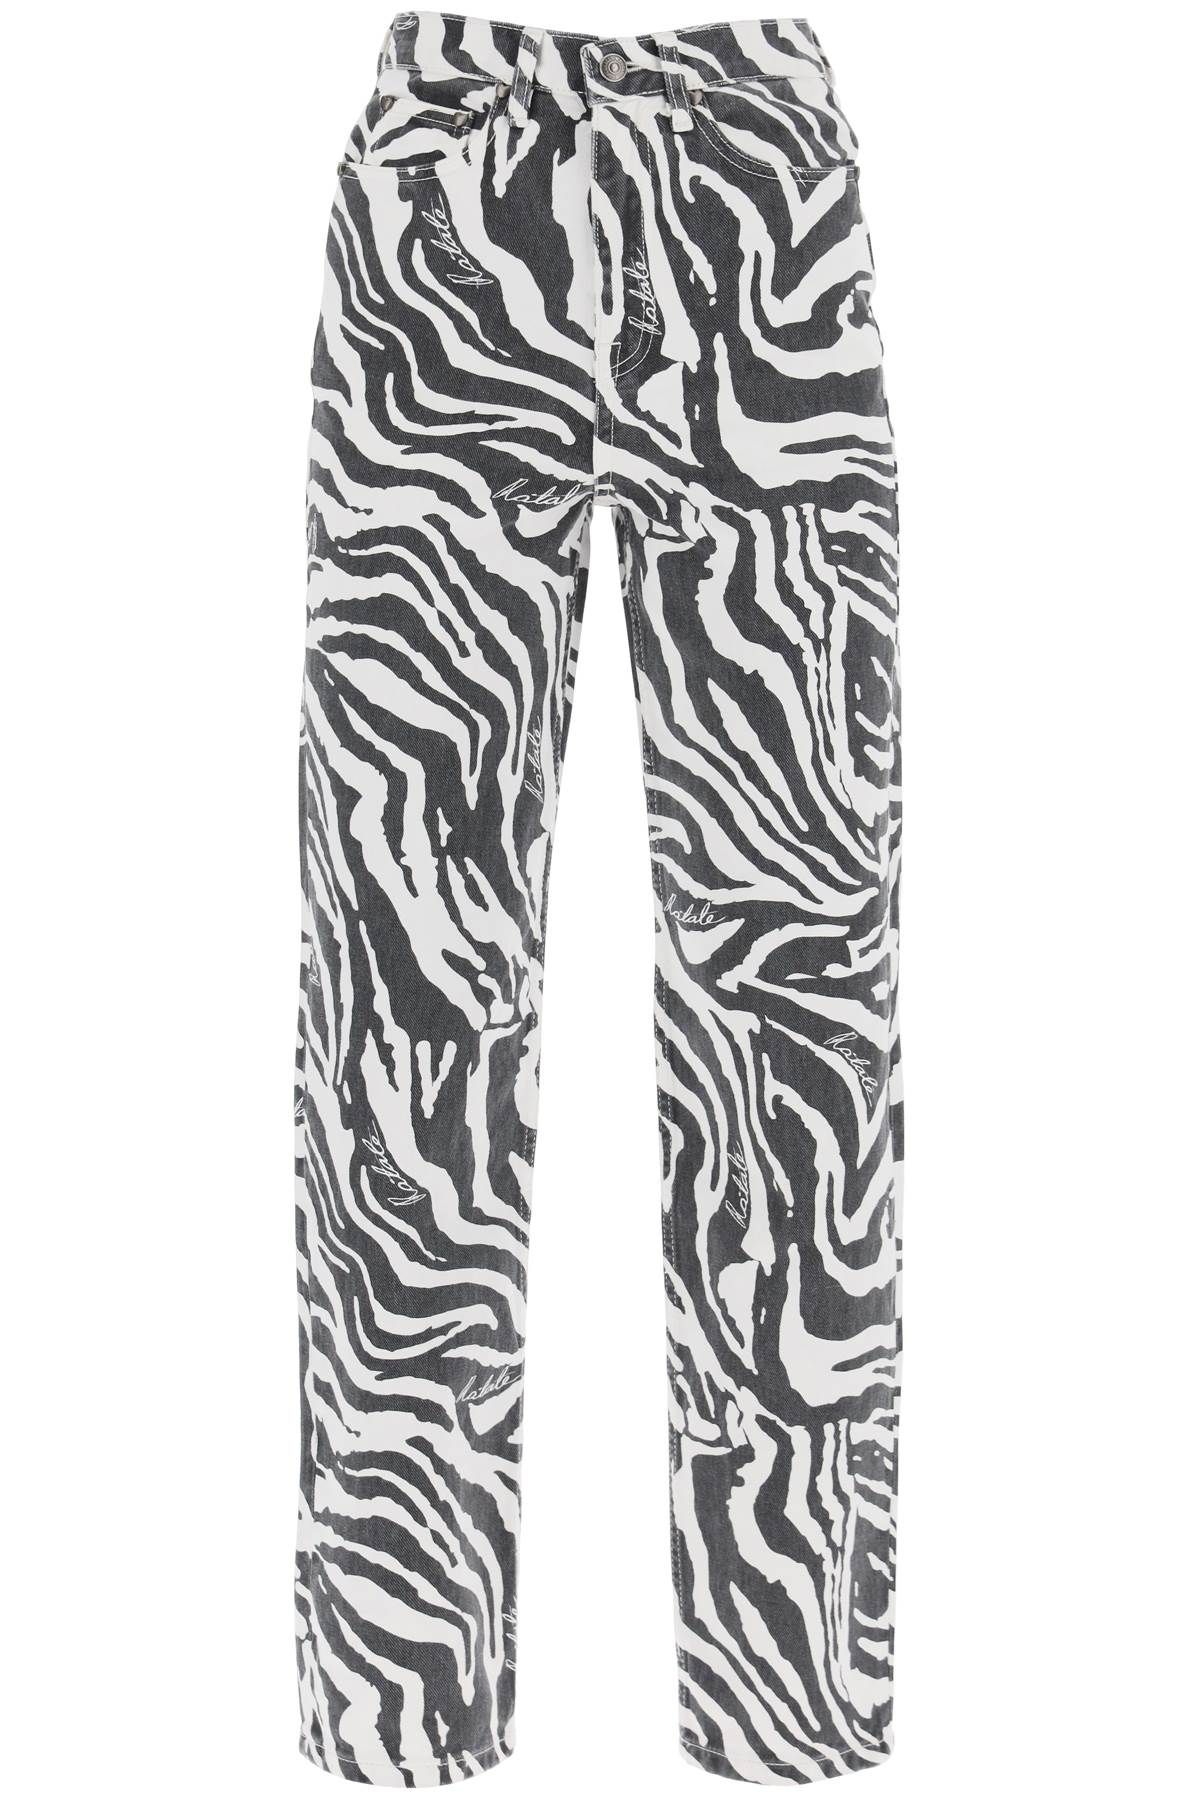 Rotate ROTATE straight leg zebra print jeans